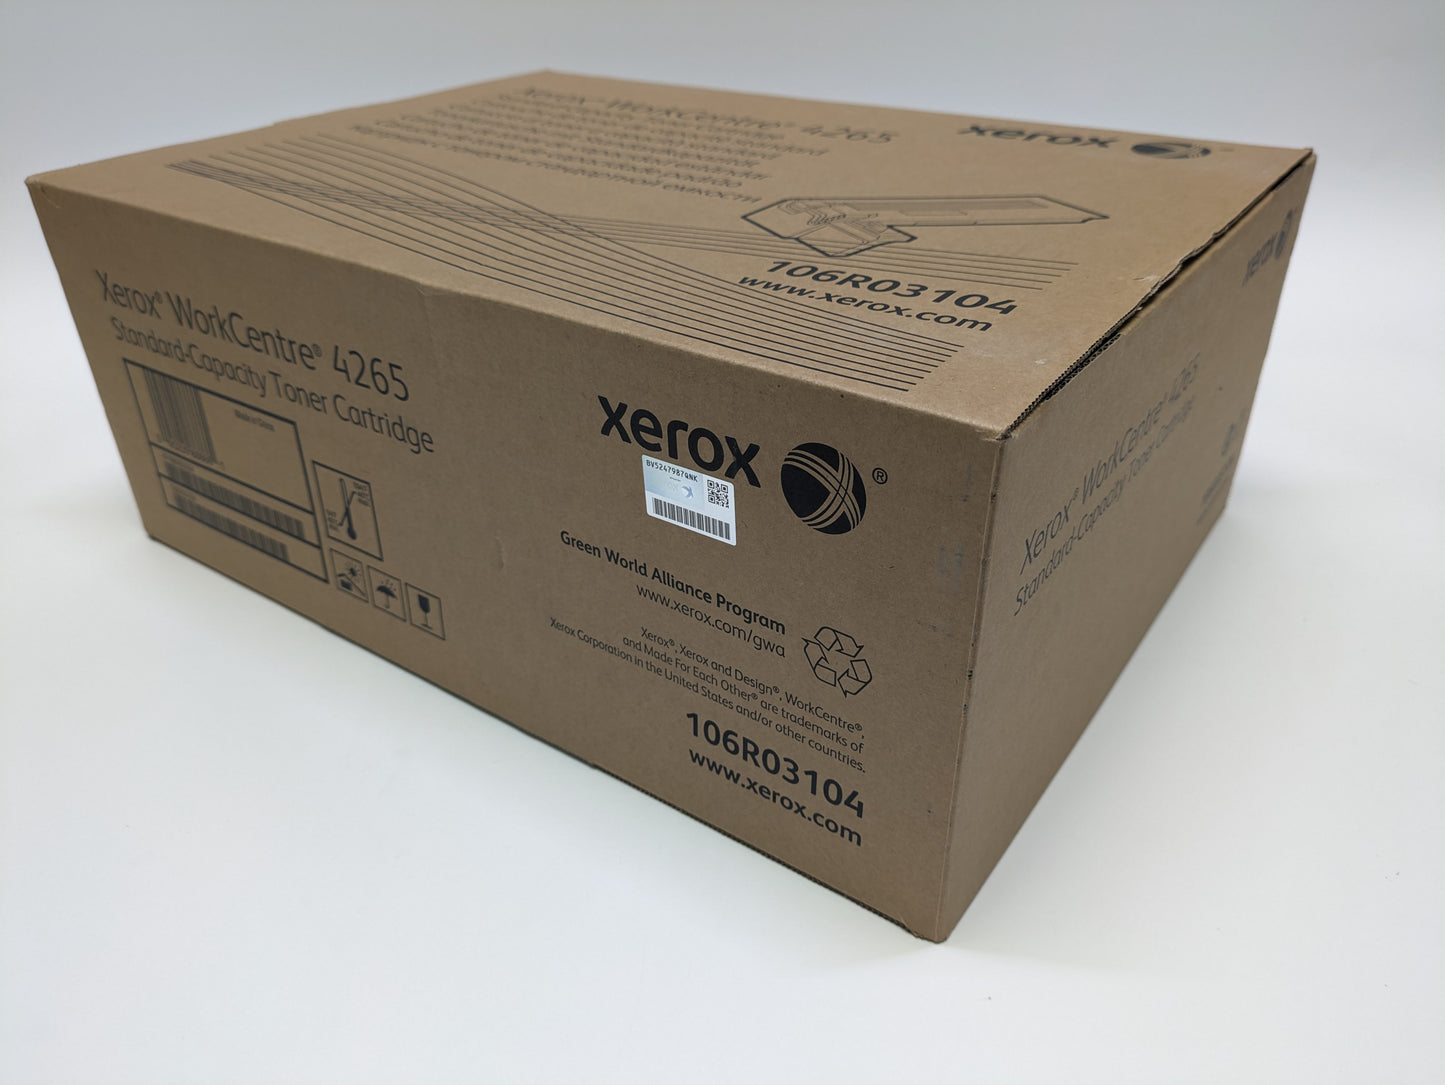 Xerox WorkCentre 4265 Black Toner Cartridge - 106R03104 New